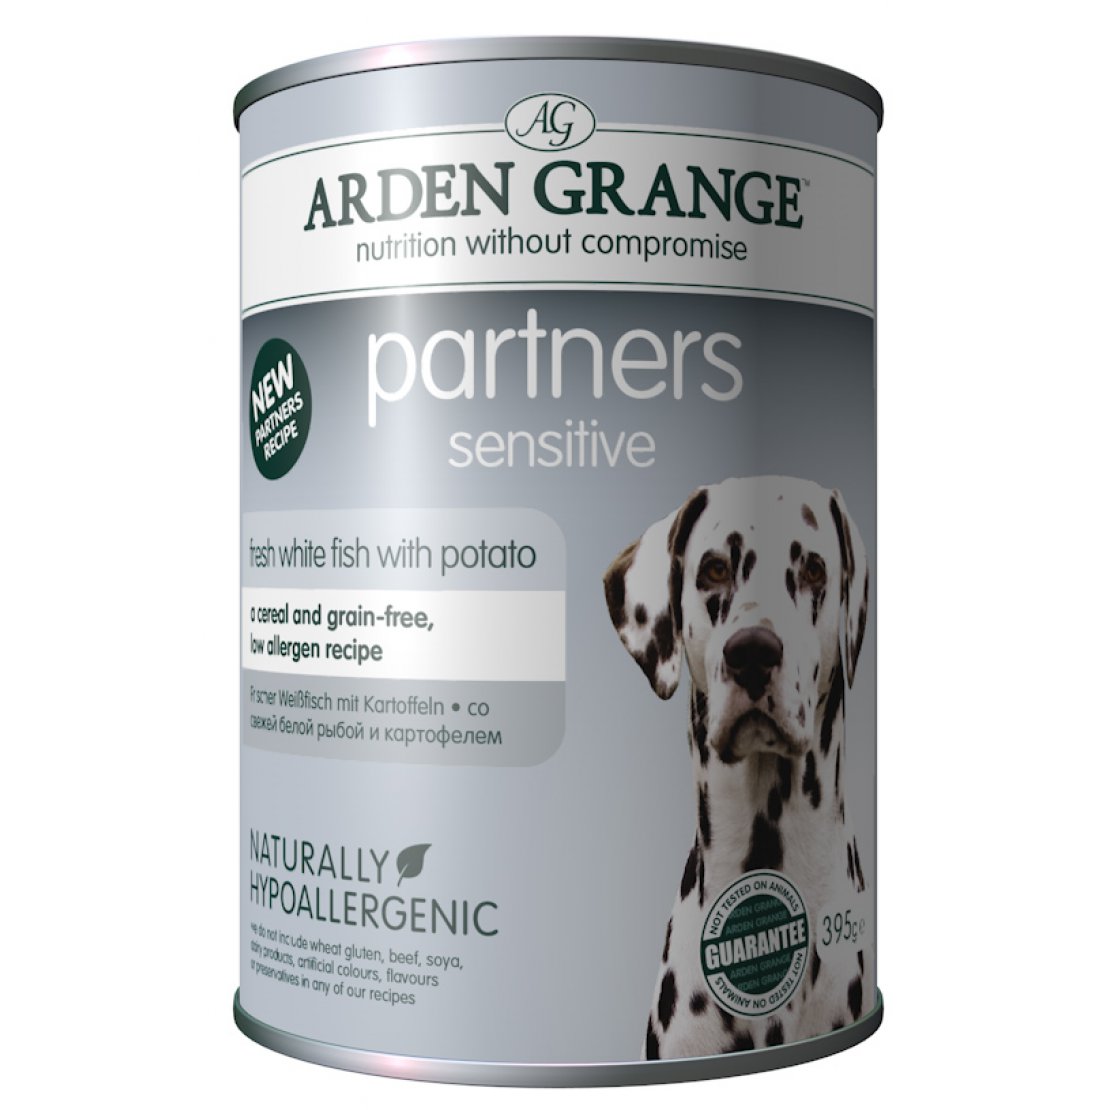 Arden Grange Partners Adult Sensitive Fresh White Fish With Potato